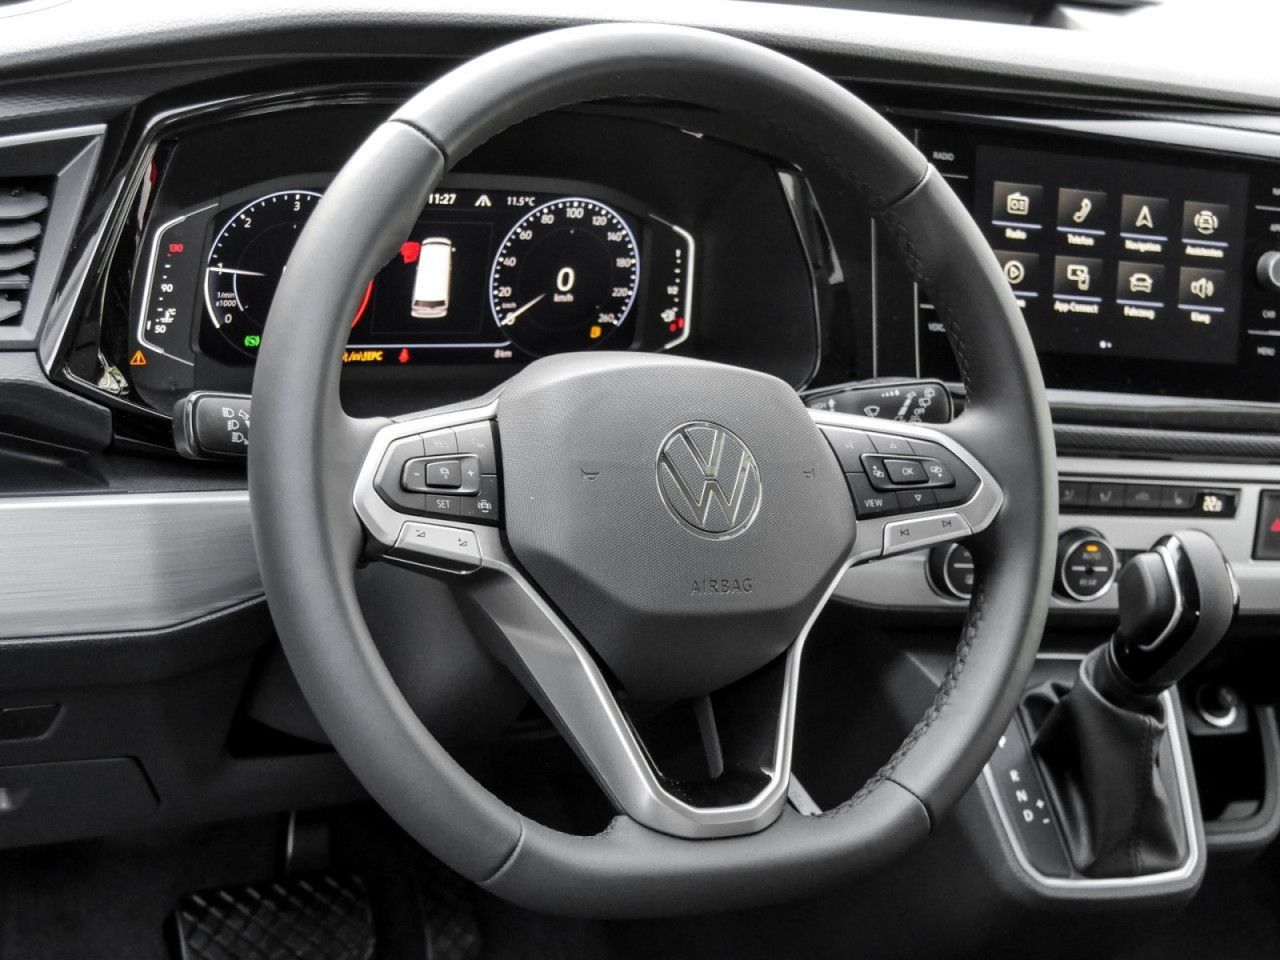 Fahrzeugabbildung Volkswagen Multivan 6.1 Comfortline Motor 2,0 l TDI SCR 150